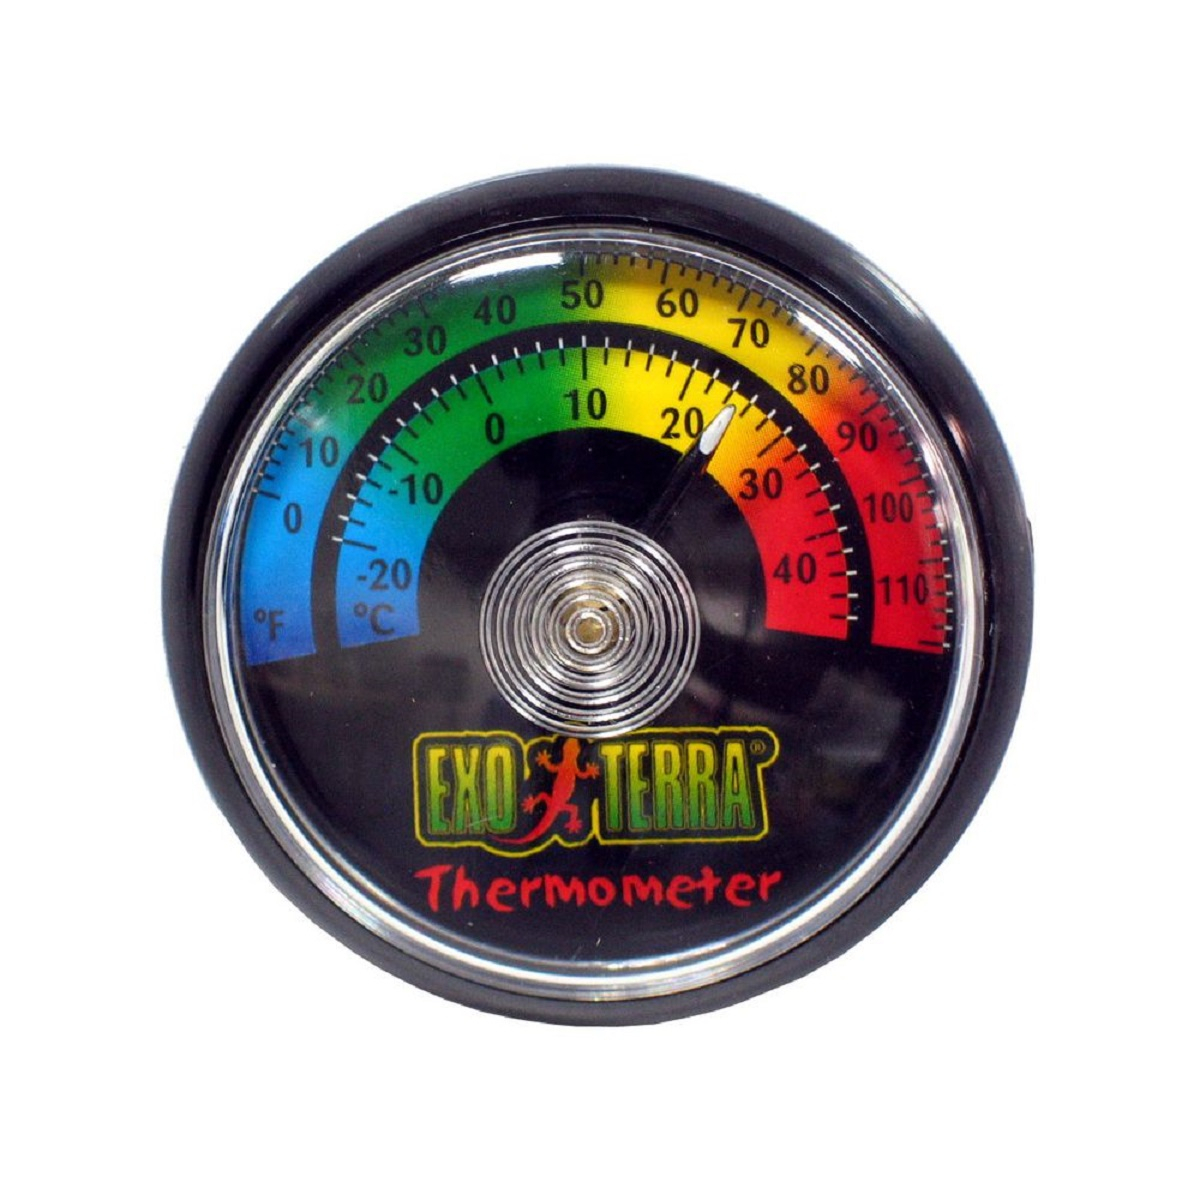 Thermomètre analogique pour terrarium Exo Terra